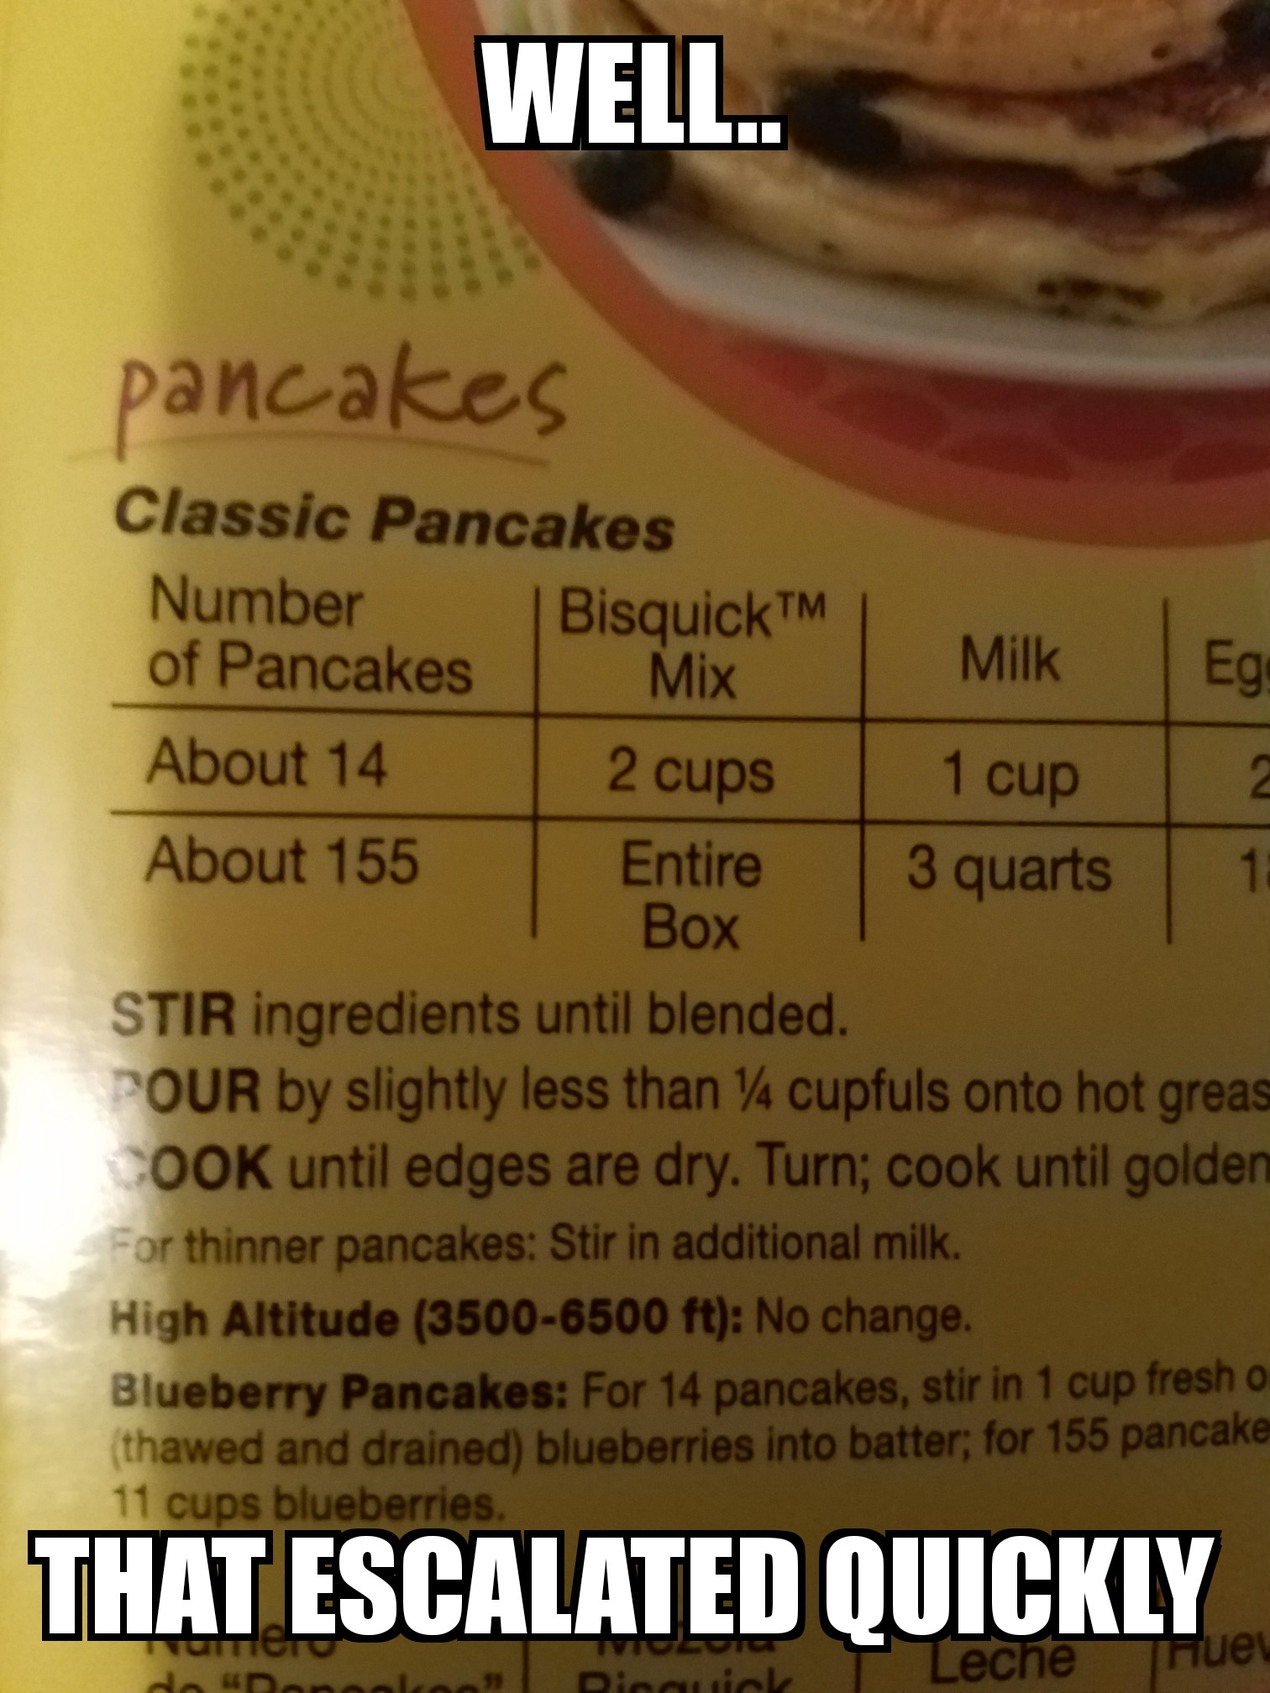 Title loves pancakes - meme